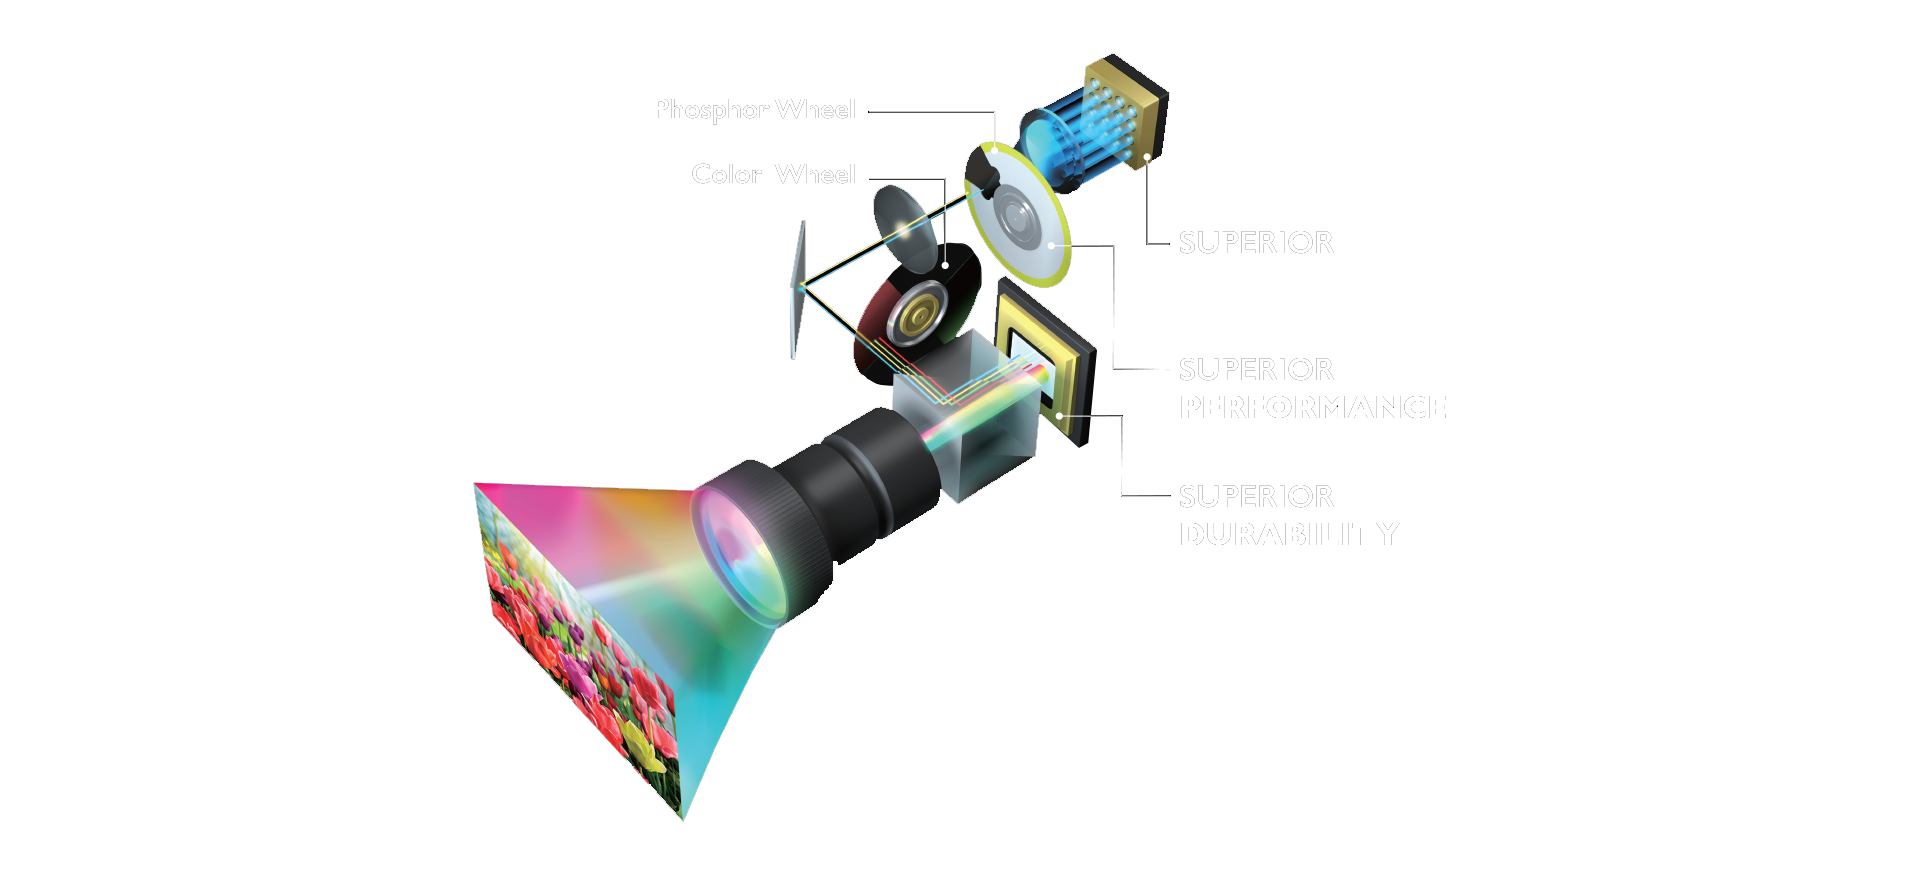 BenQ 4K BlueCore Laser Projector from No. 1 DLP brand 